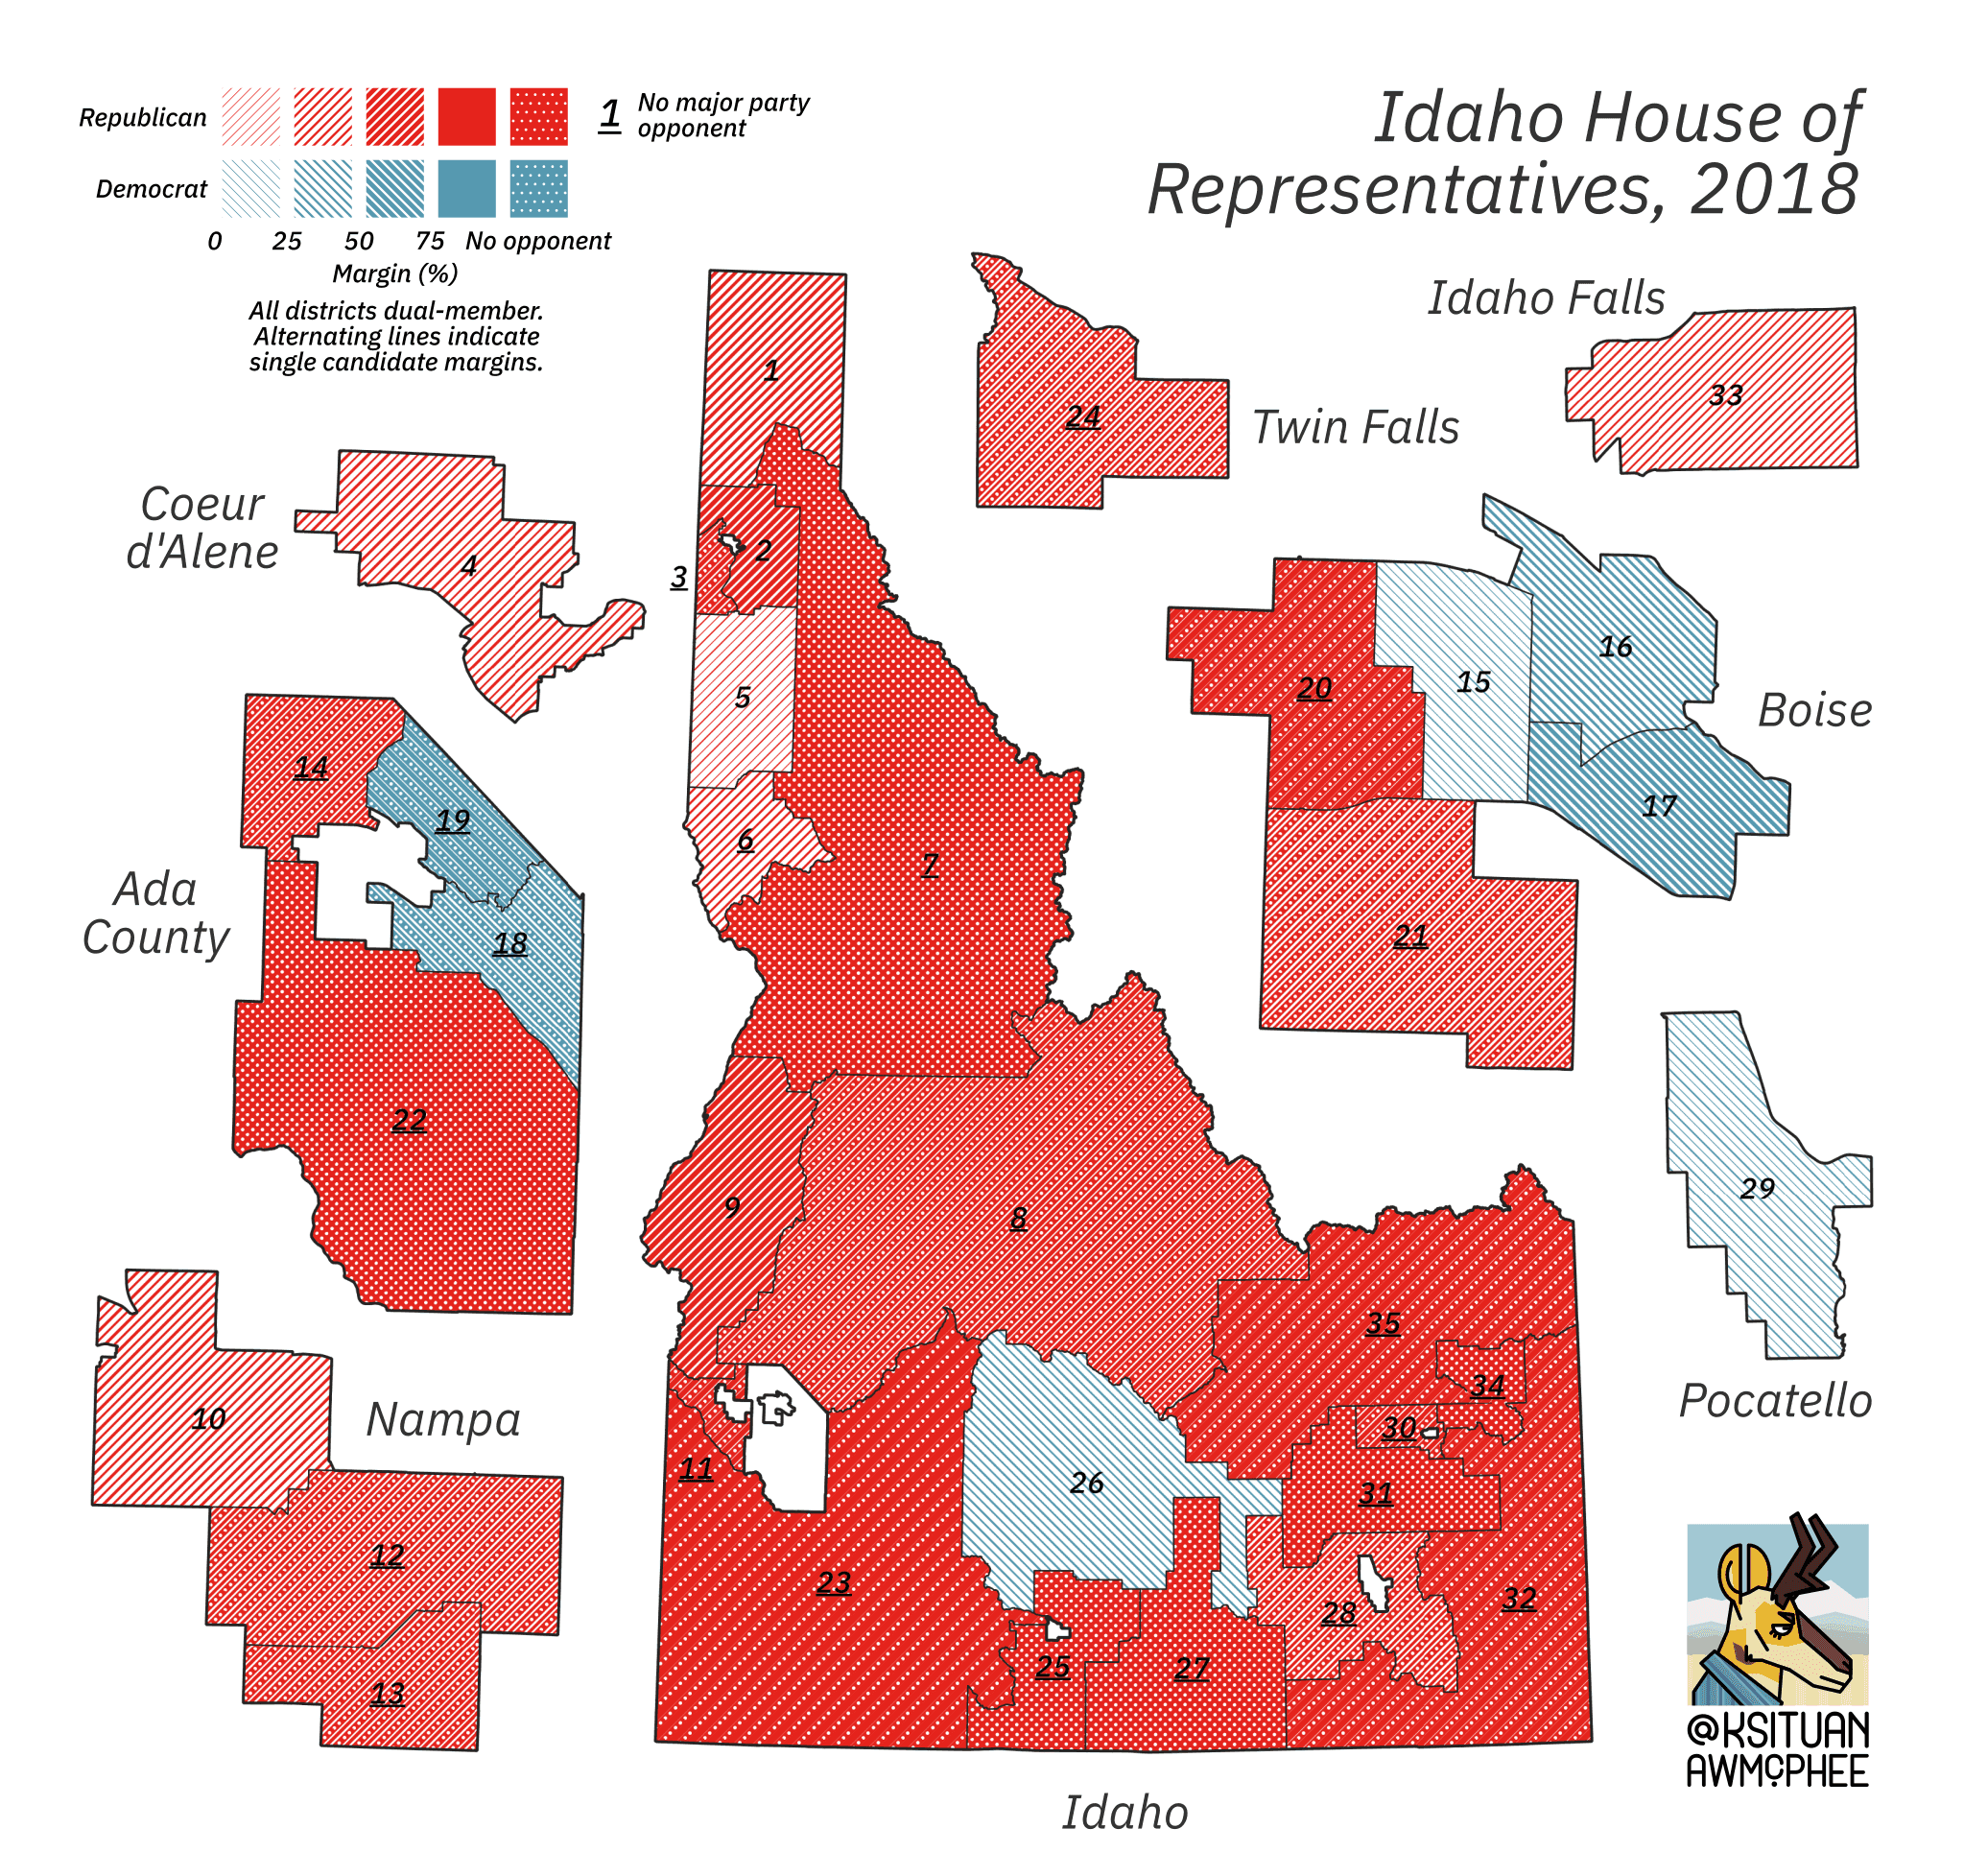 A political map of Idaho.